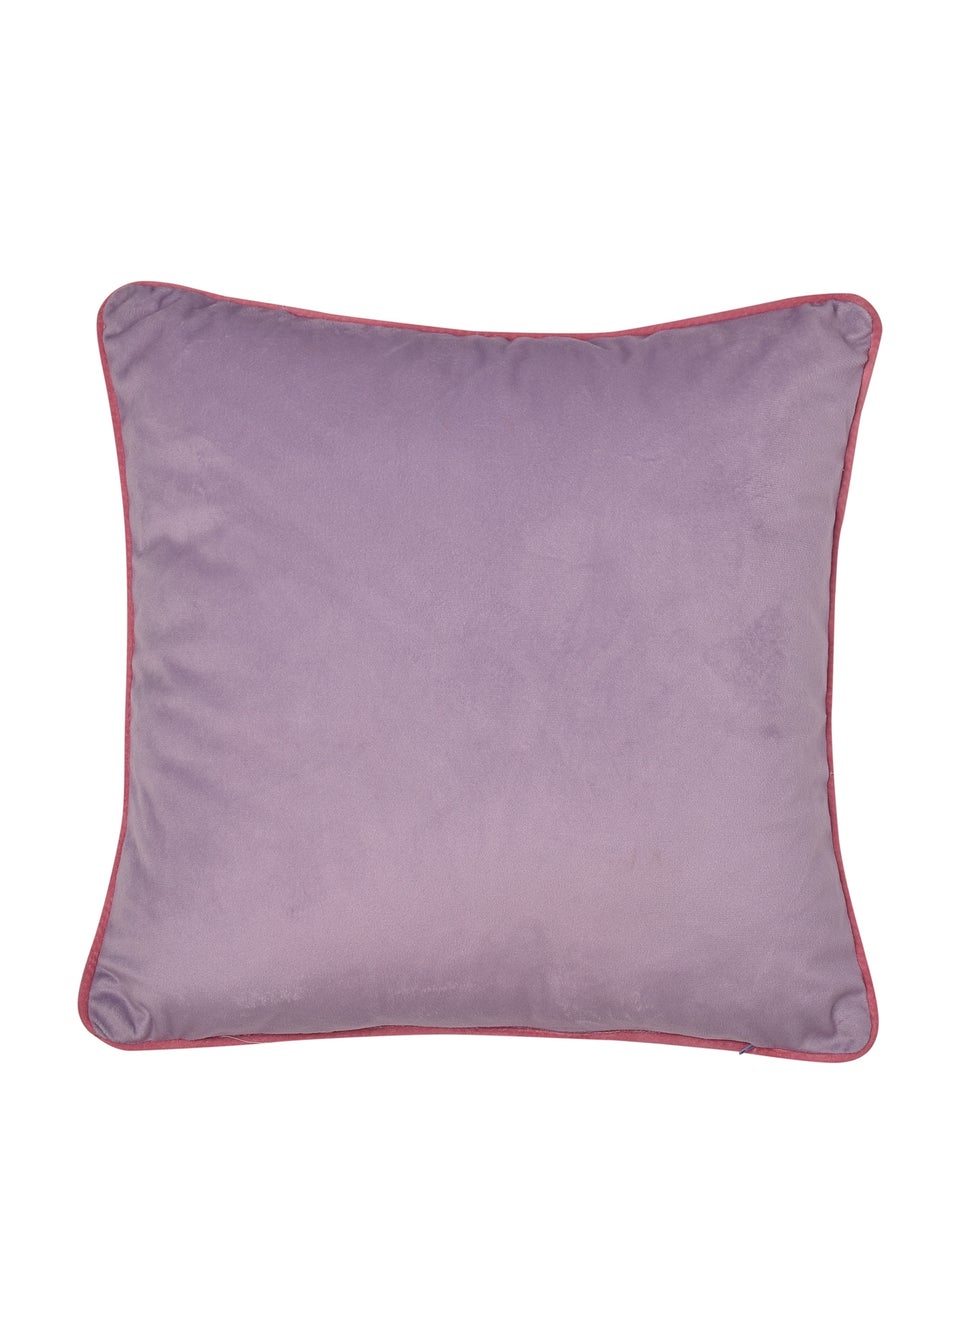 Appletree Heritage Arley Velvet Lilac Filled Cushion (43cm x 43cm)